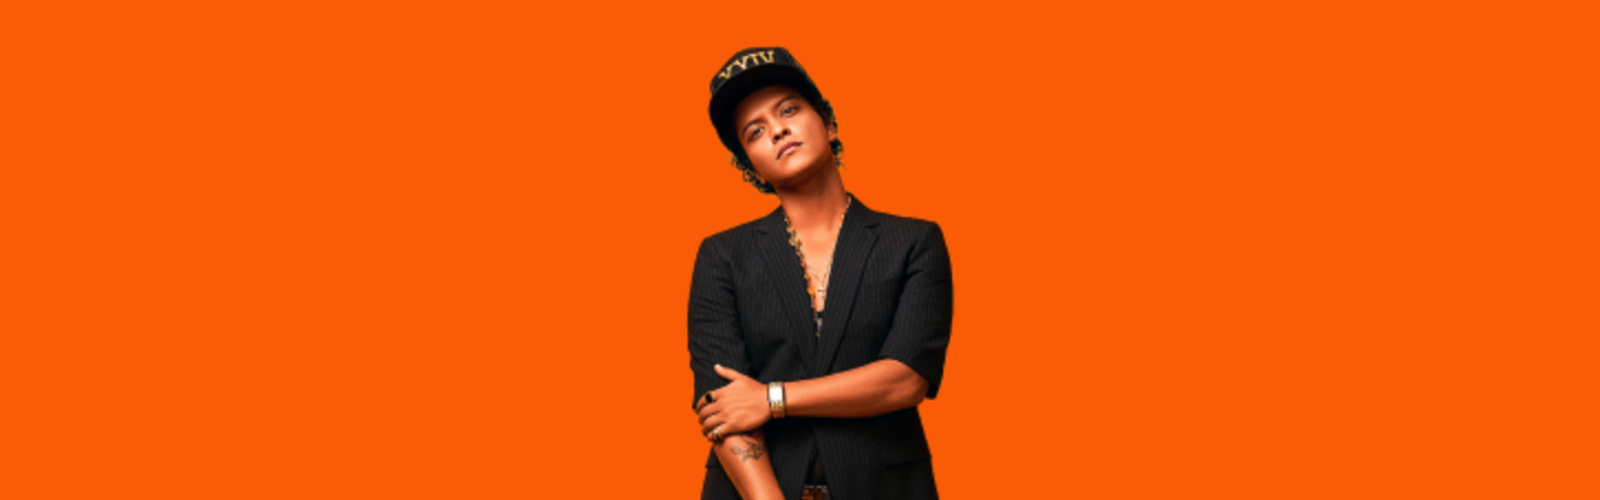 Roskilde Festival 2018 confirms Bruno Mars